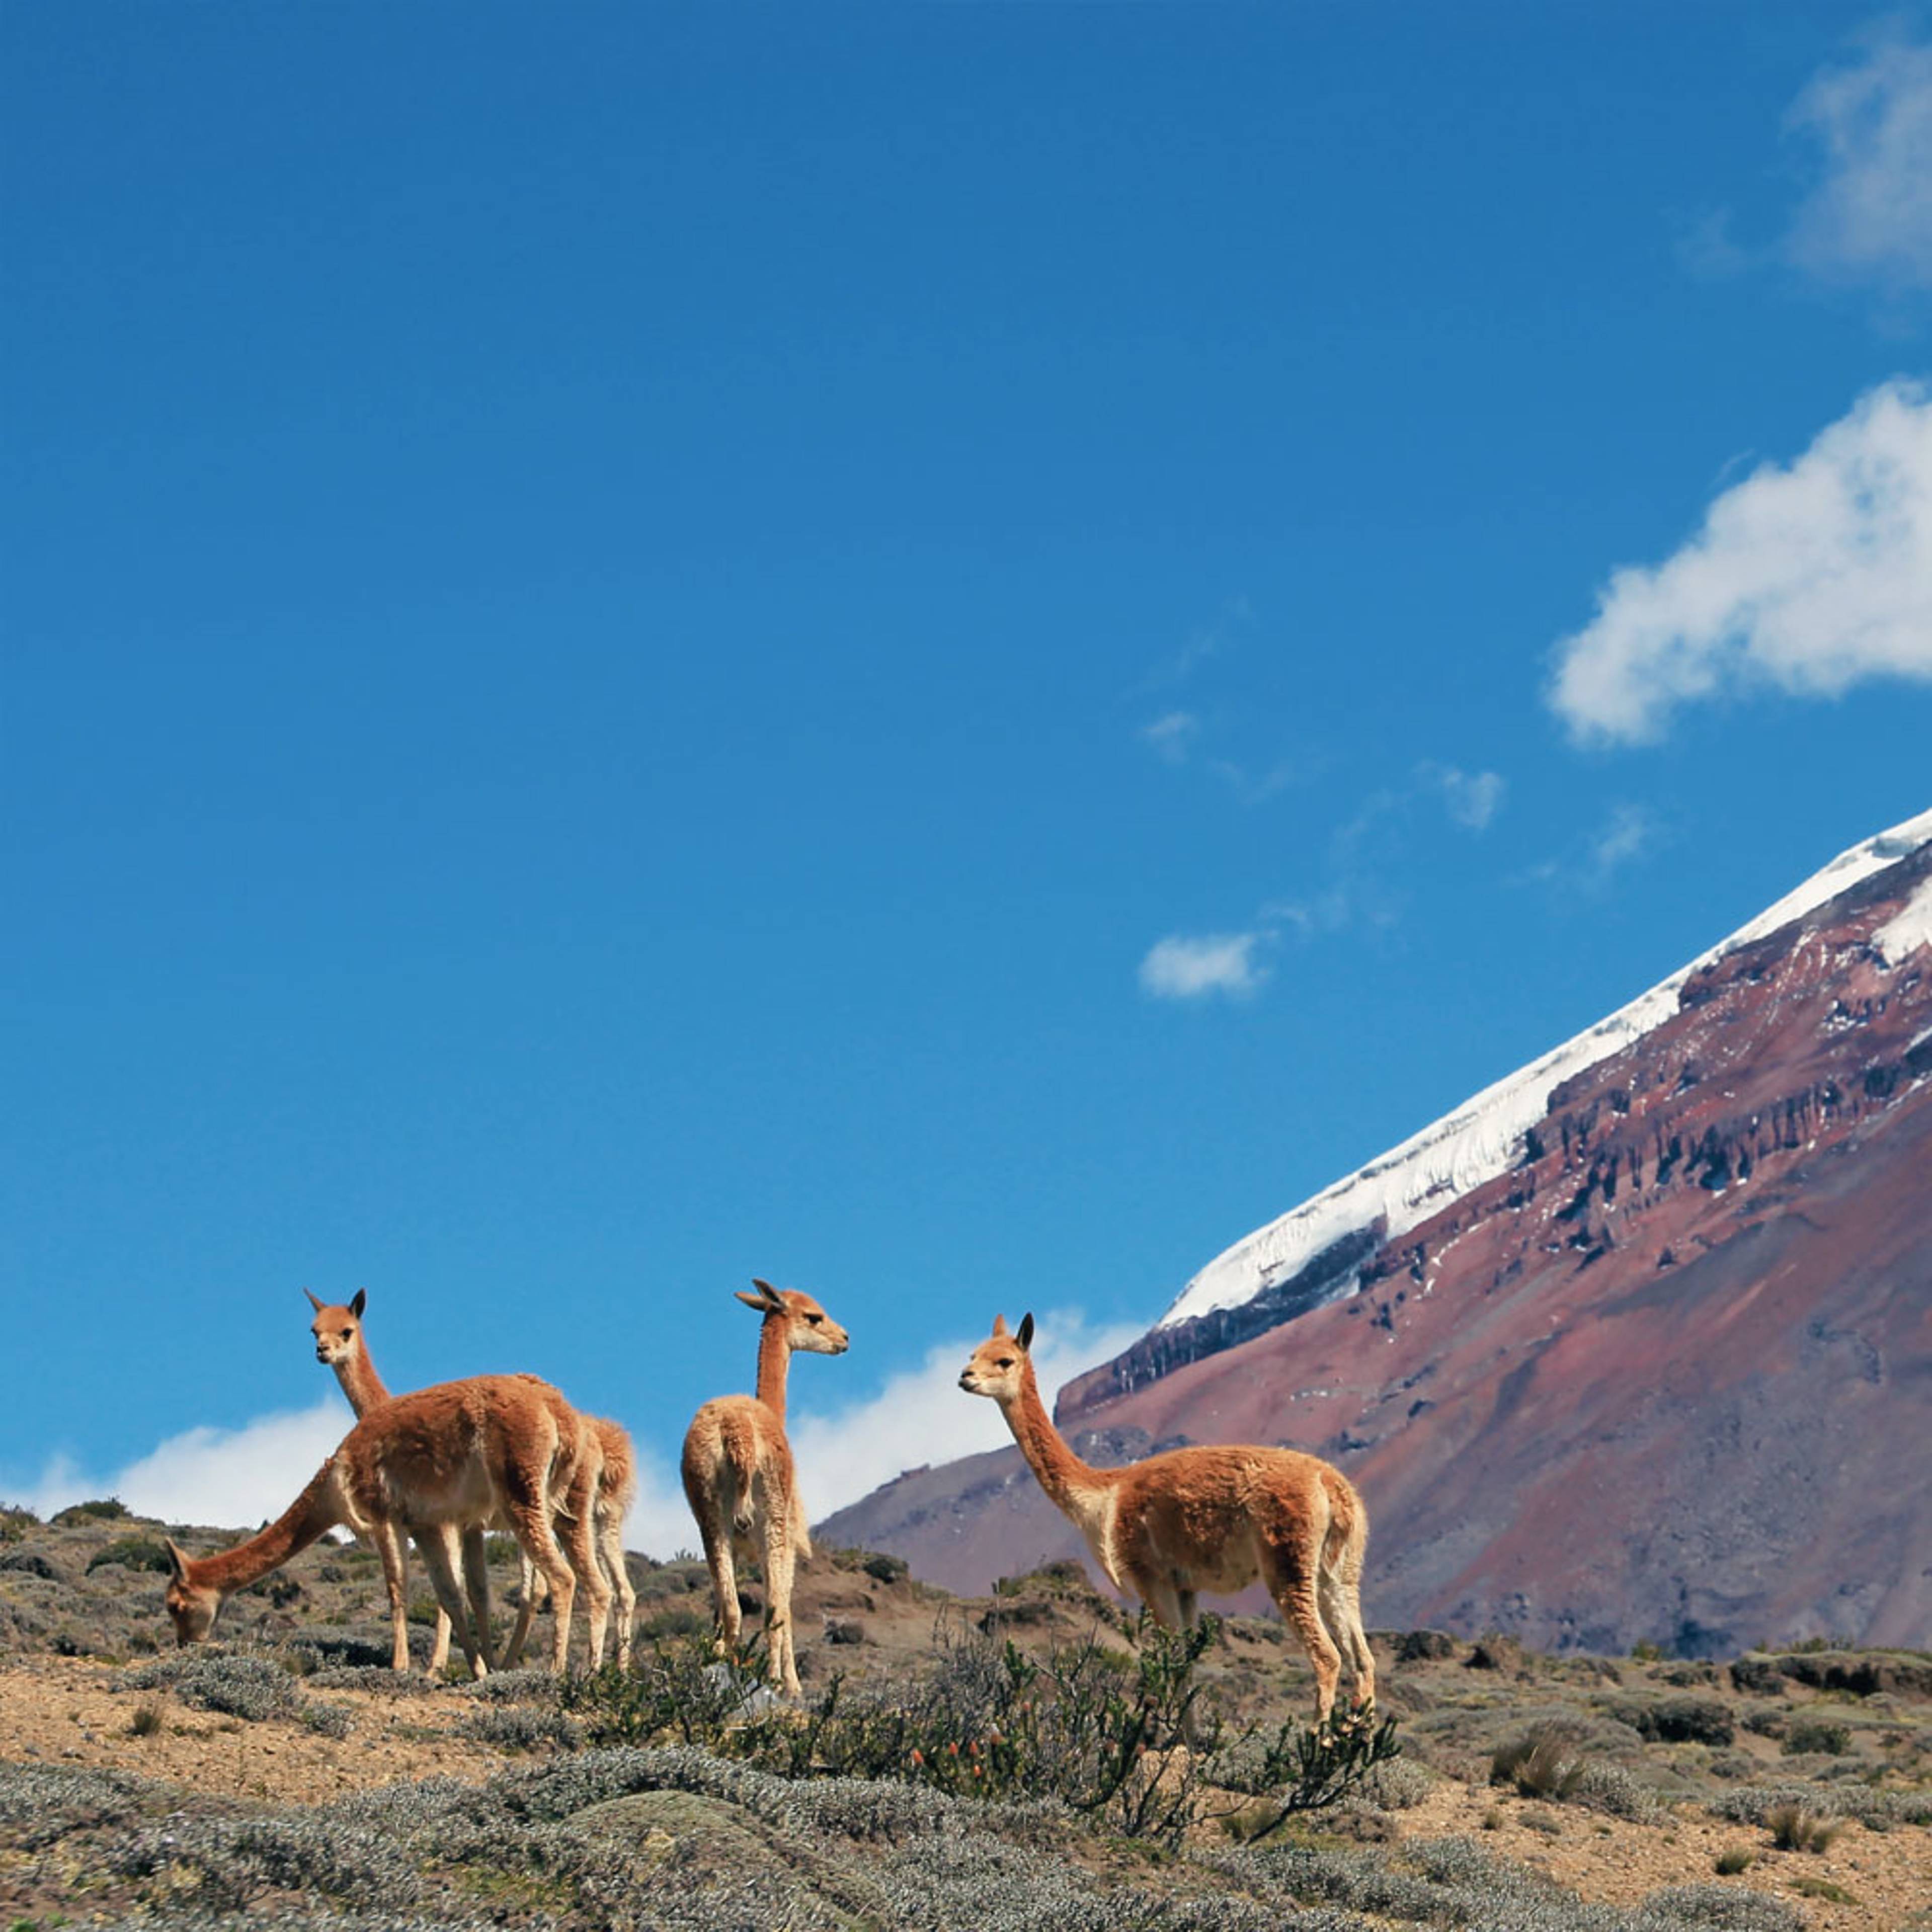 Design your perfect volcano tour with a local expert in Ecuador